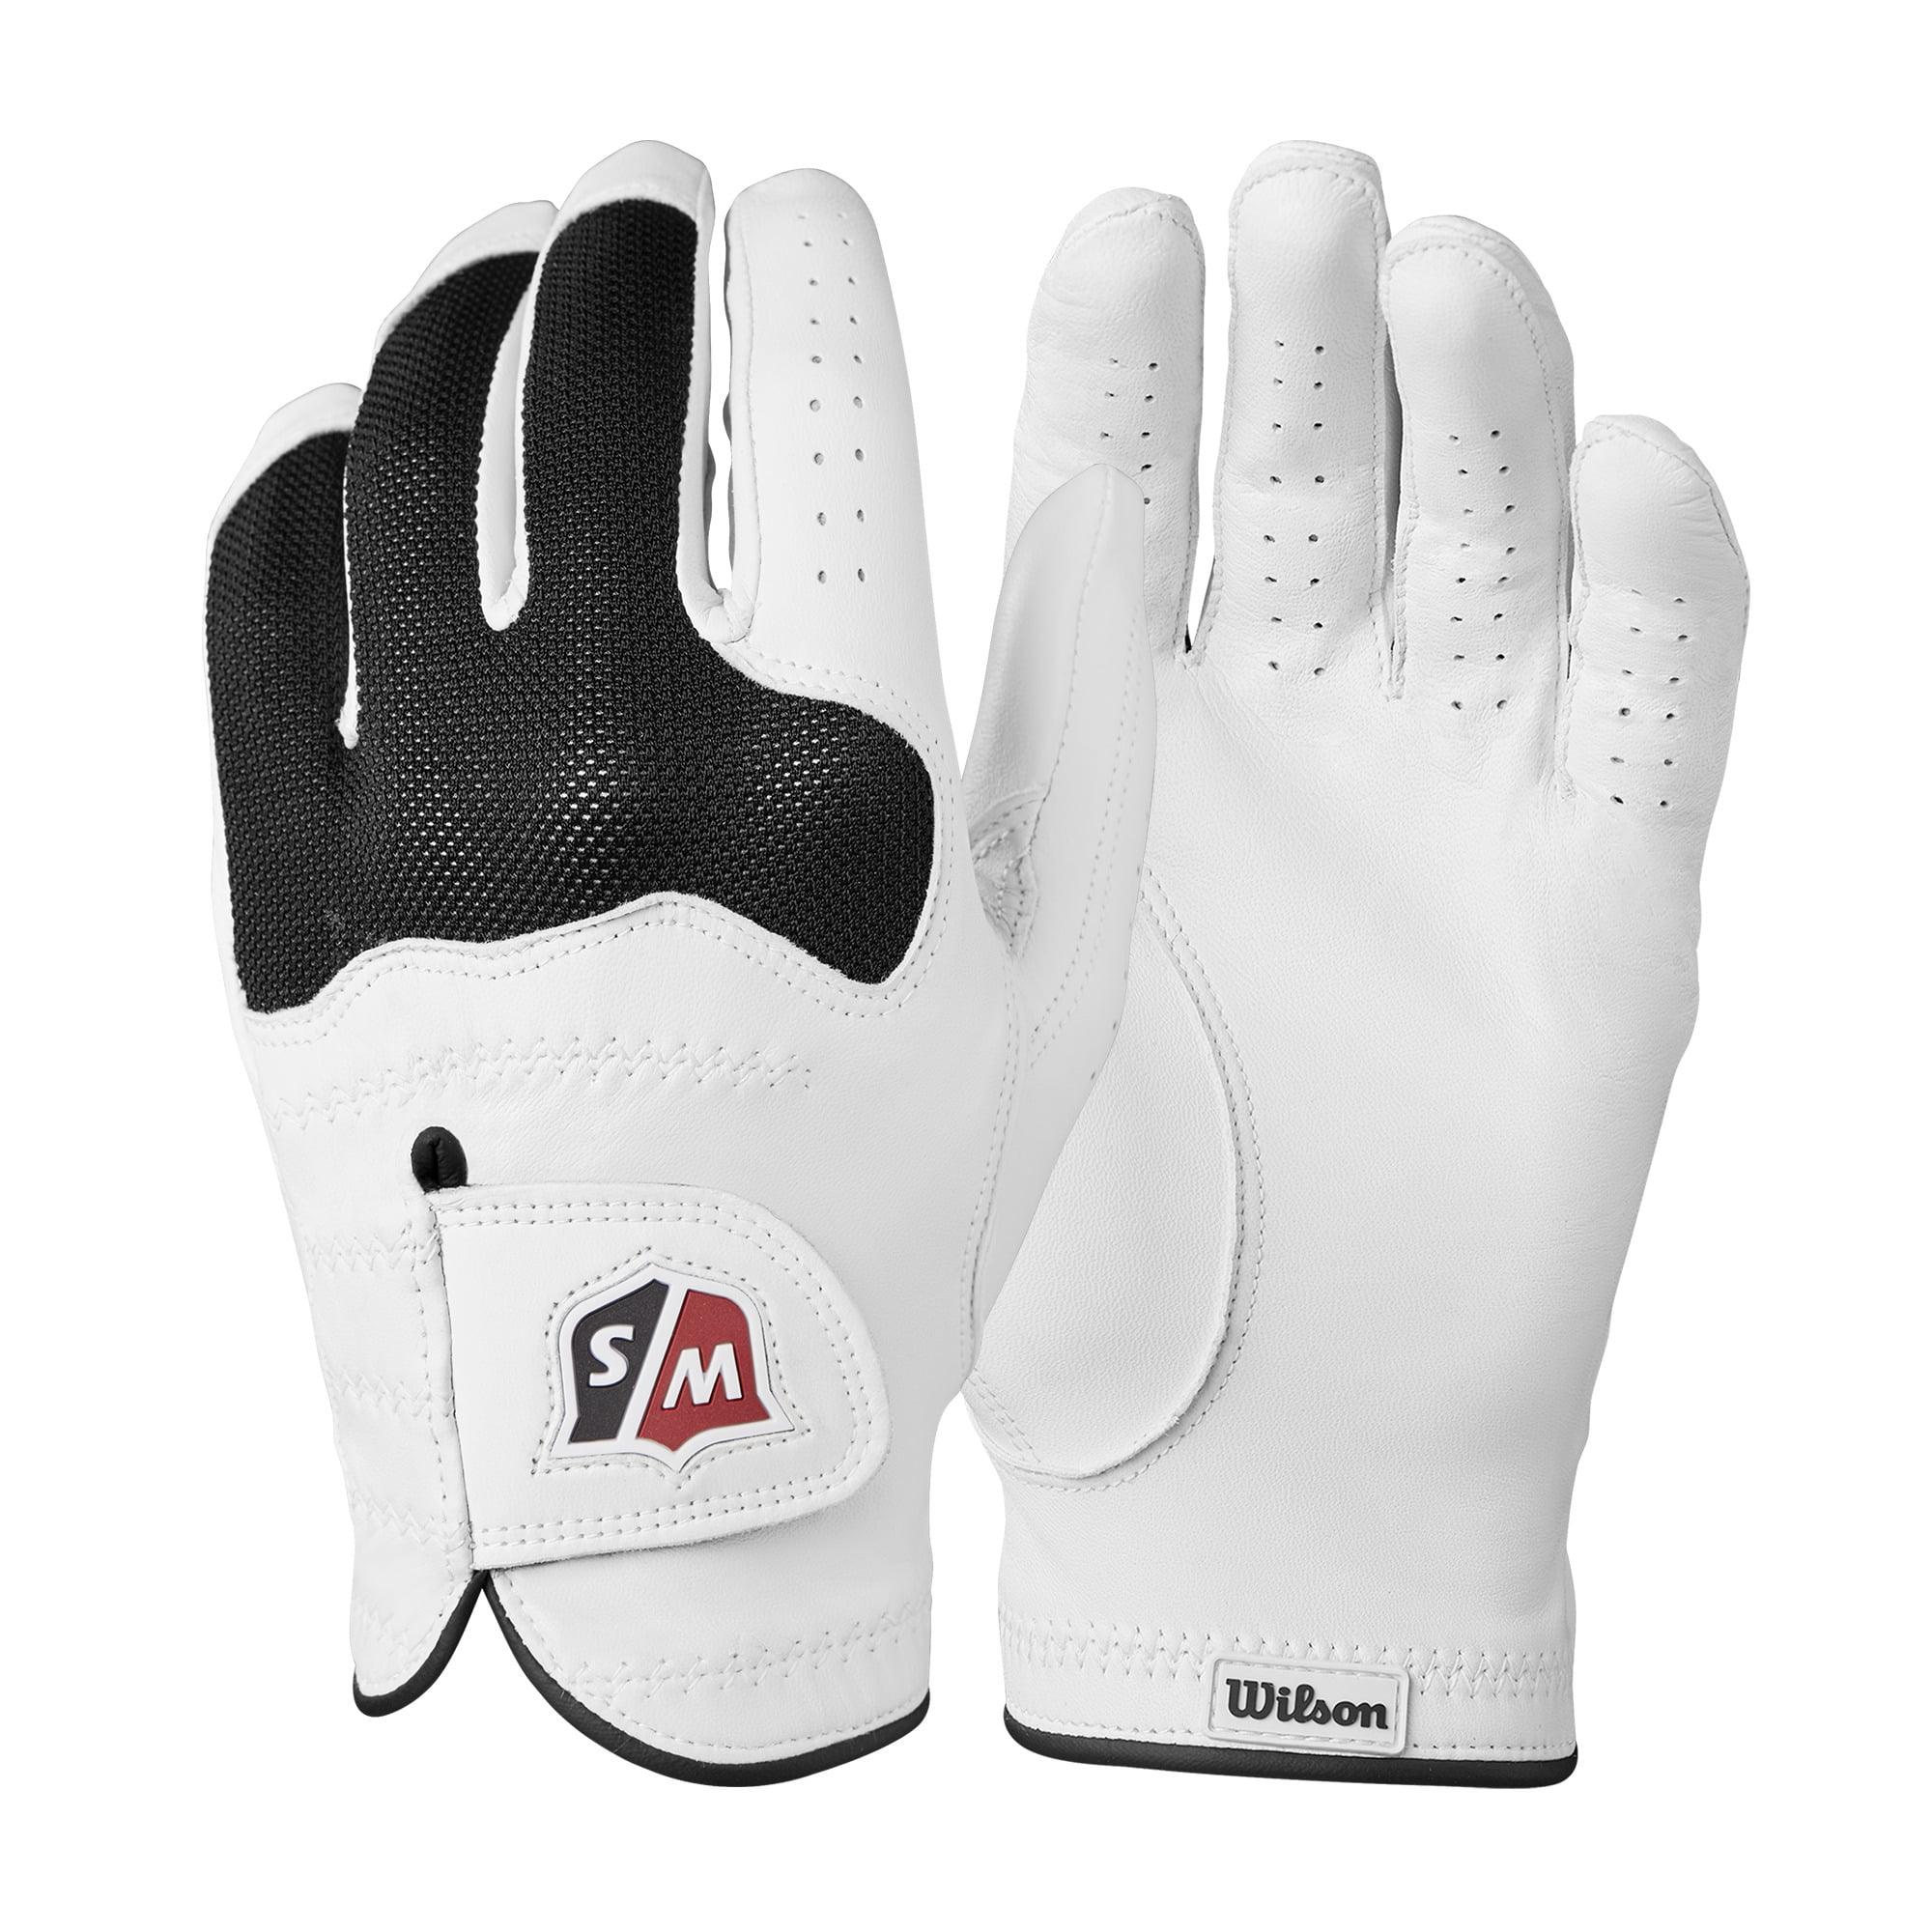 Wilson Staff Conform Men's Cadet Left Hand Golf Glove (X-Large) $9.51 + Free Shipping w/Walmart+ or on $35